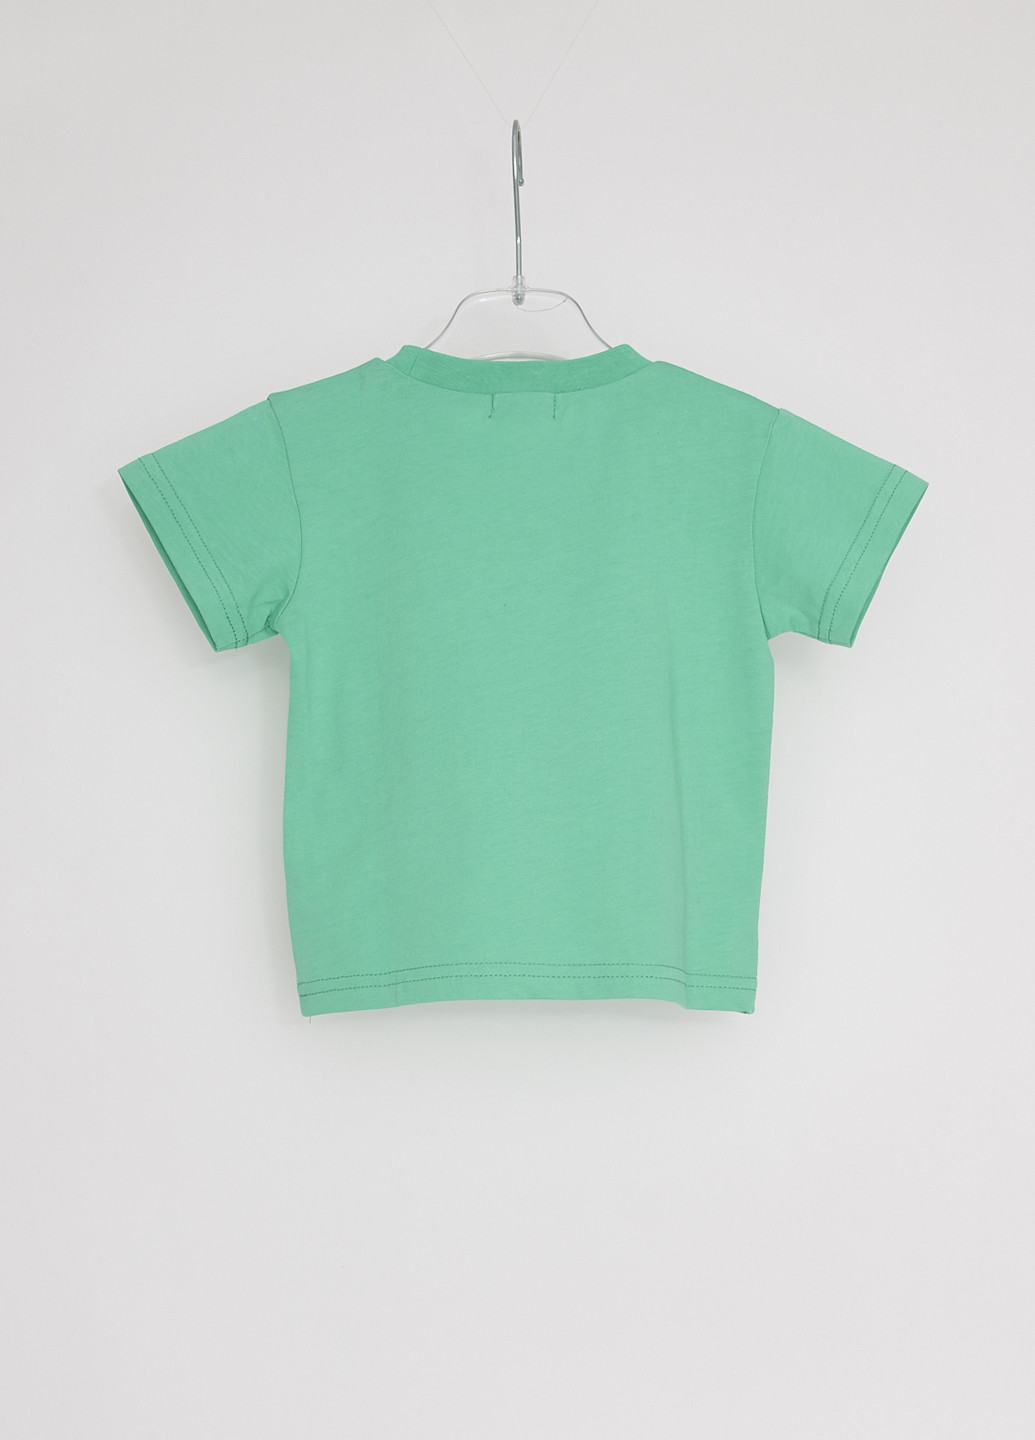 Светло-зеленая летняя футболка Marasil